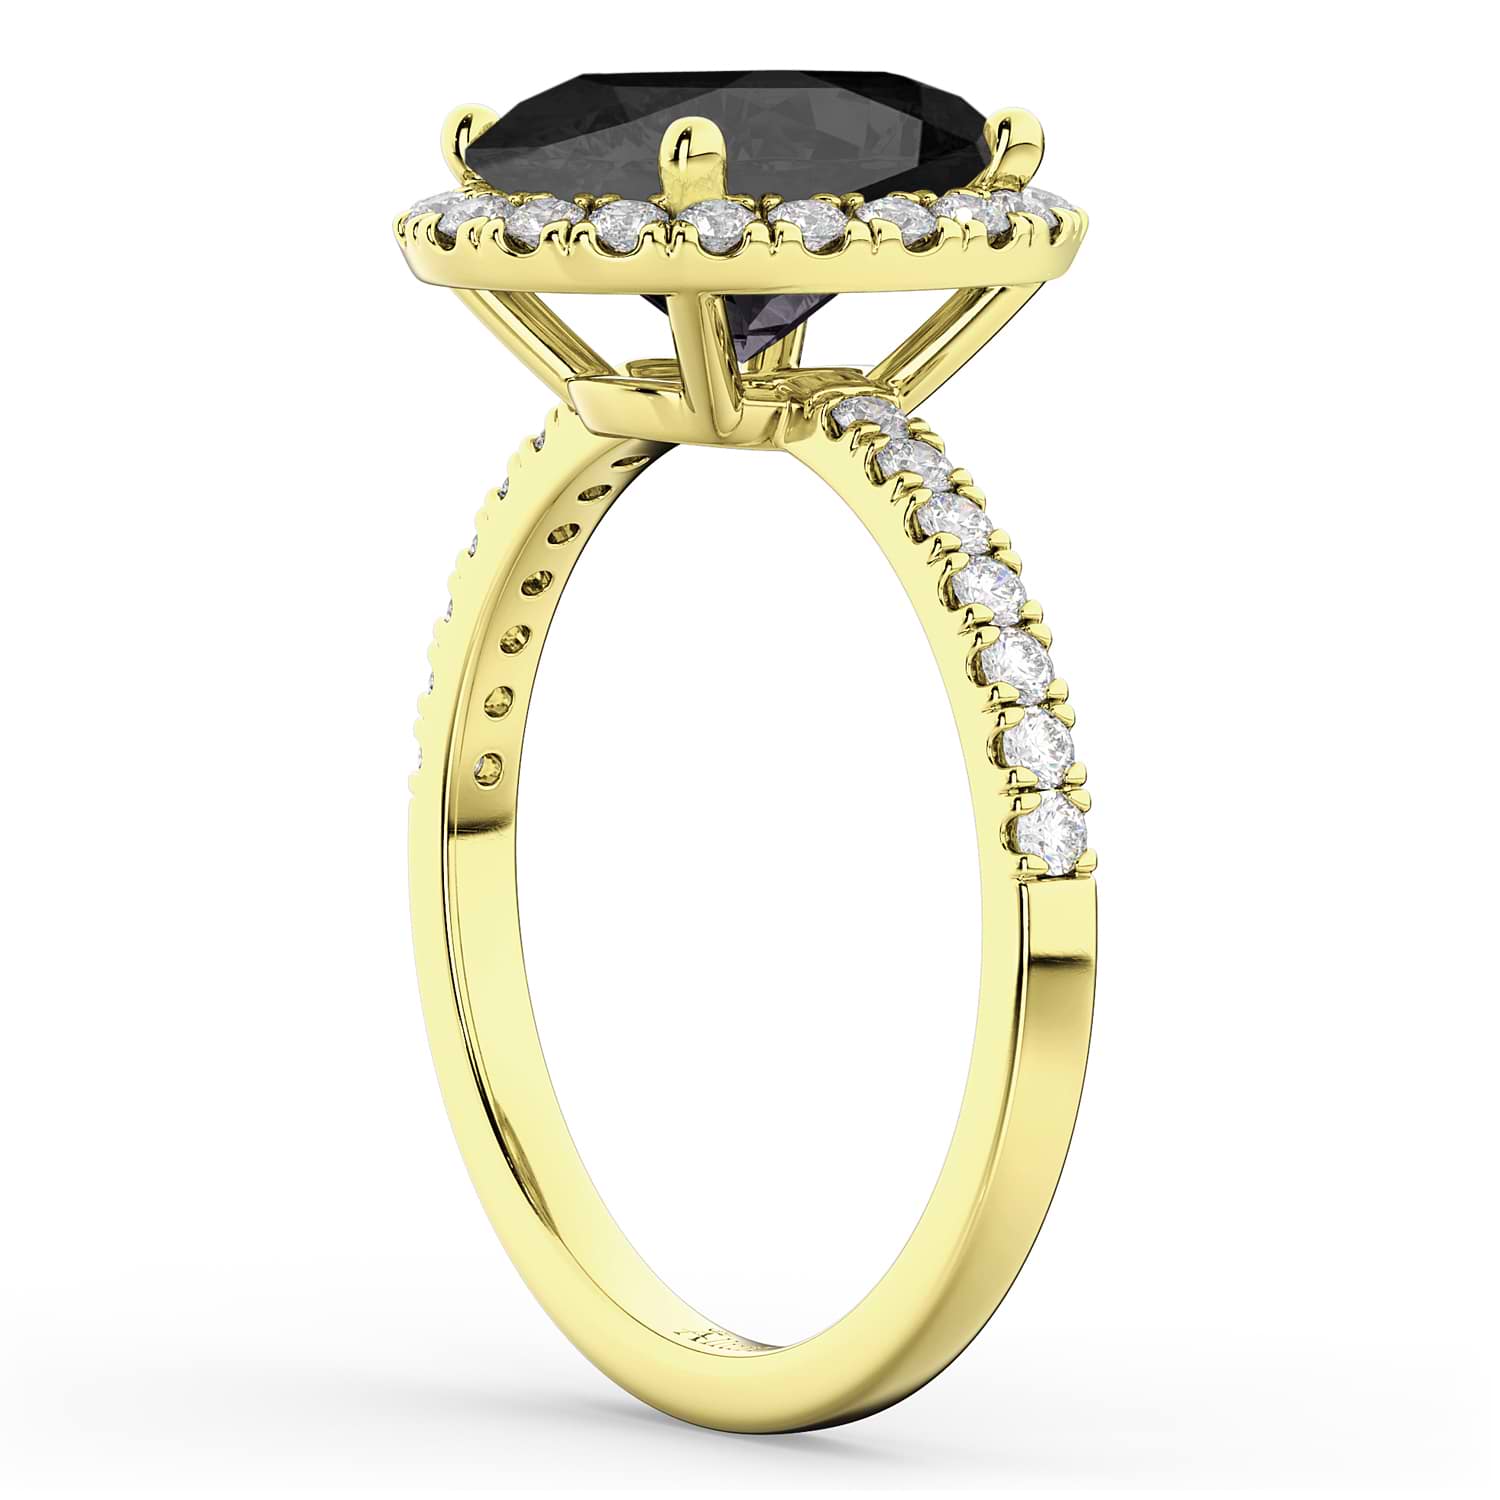 Oval Cut Halo Black Onyx & Diamond Engagement Ring 14K Yellow Gold 2.91ct